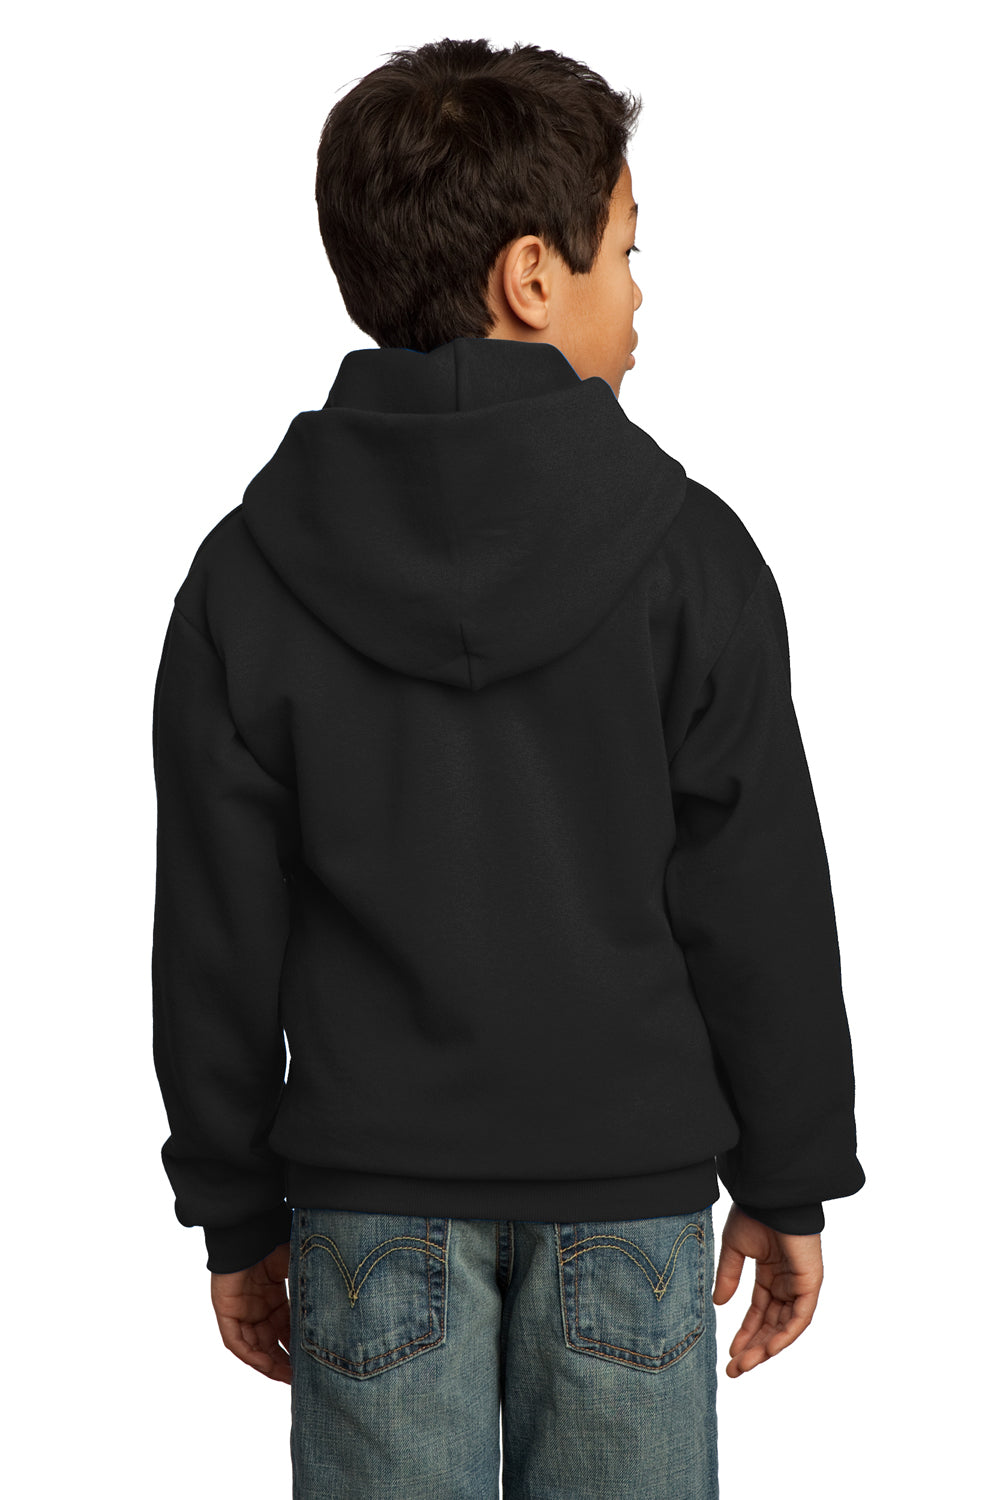 Port & Company PC90YH Youth Core Fleece Hooded Sweatshirt Hoodie Black Back